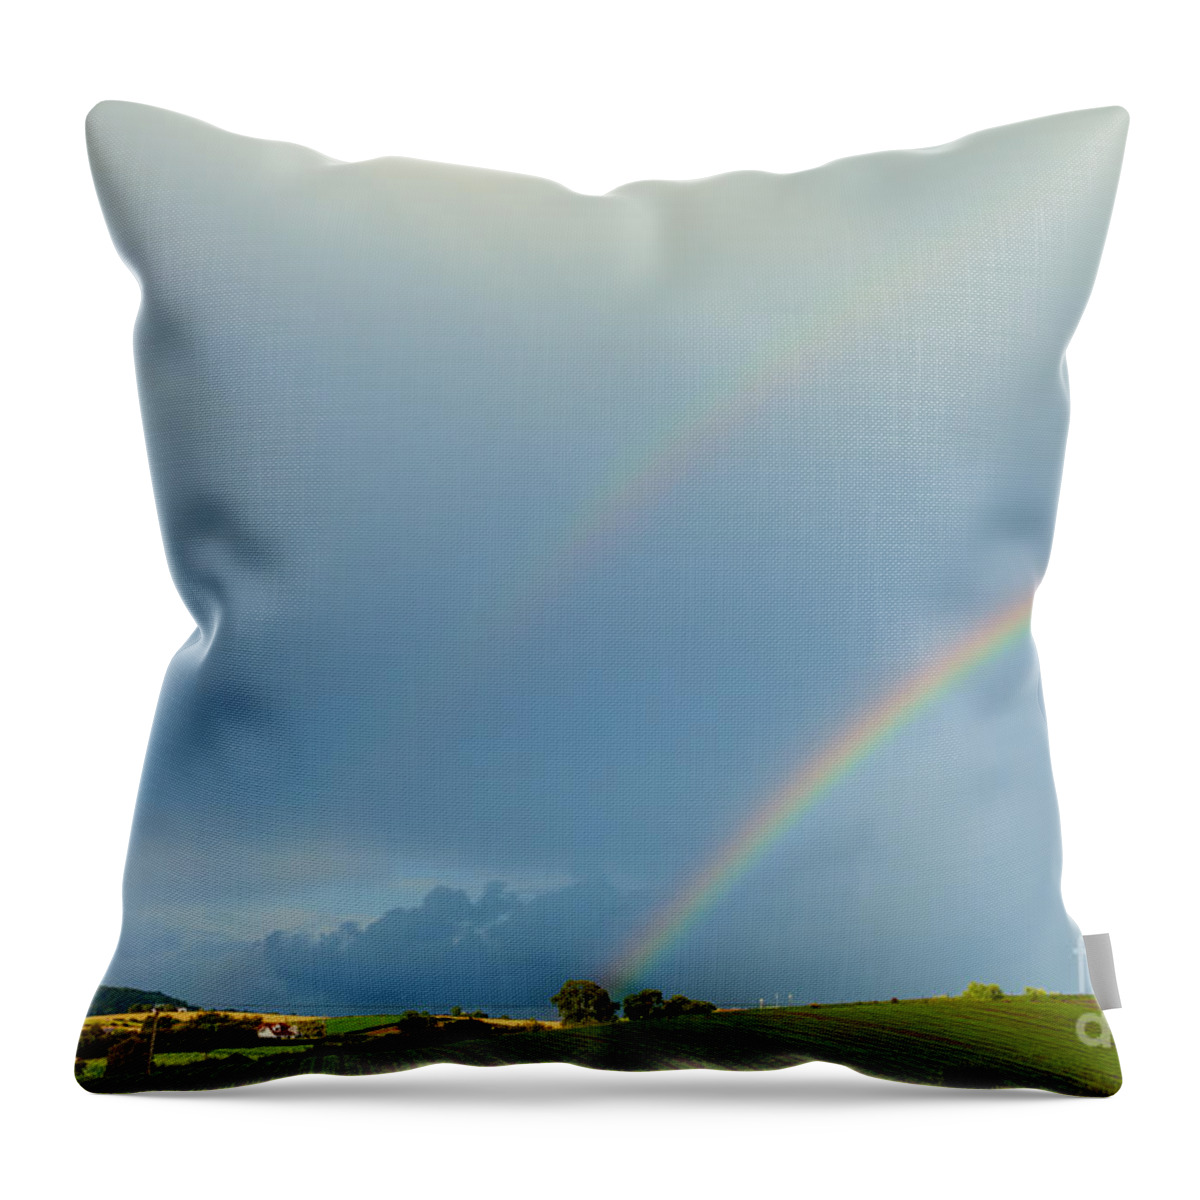 Rainbow Throw Pillow featuring the photograph Rainbow by Jim Orr